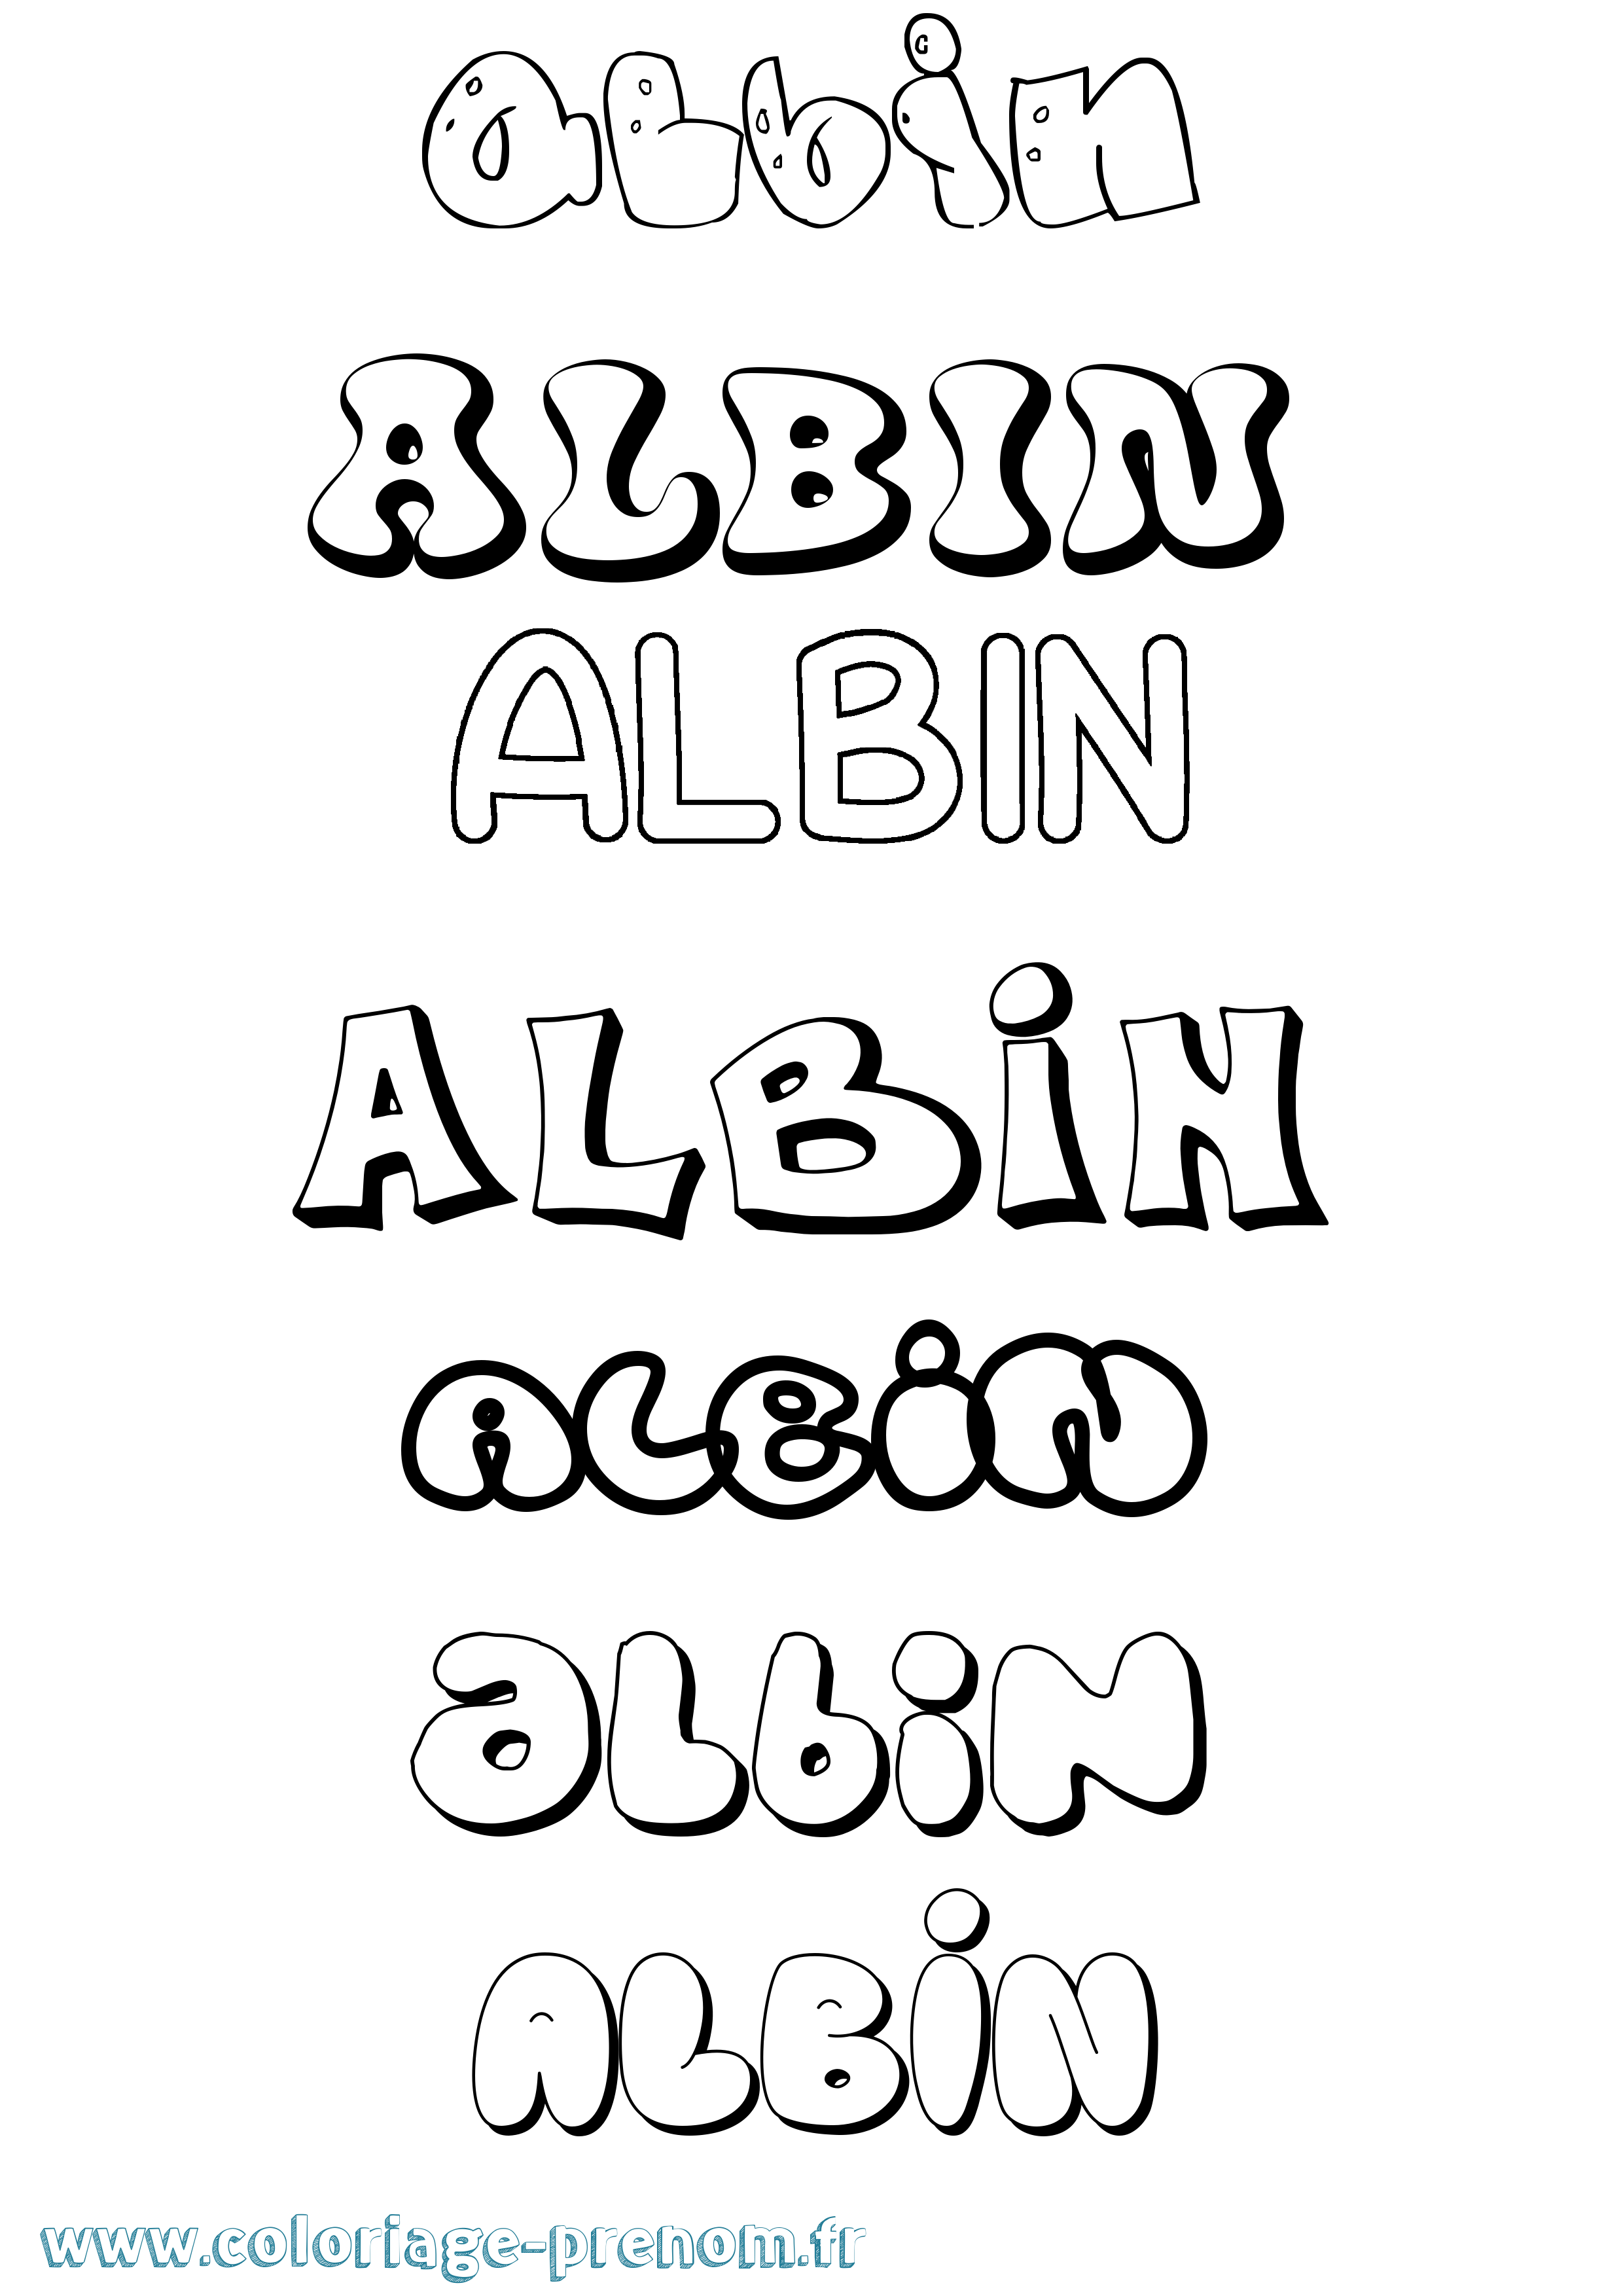 Coloriage prénom Albin Bubble